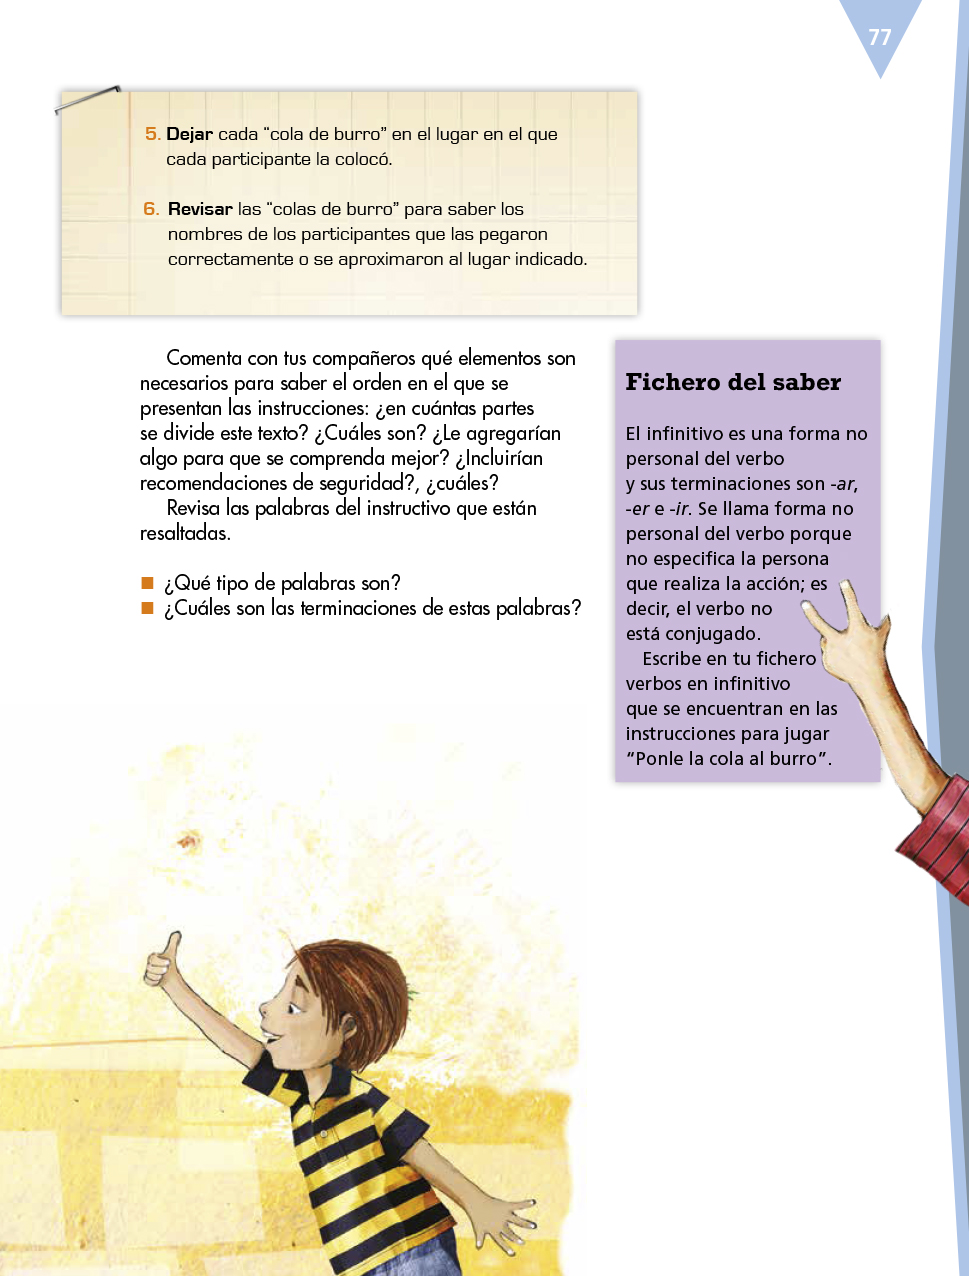 Español sexto grado 2017-2018 - Página 77 - Libros de Texto Online